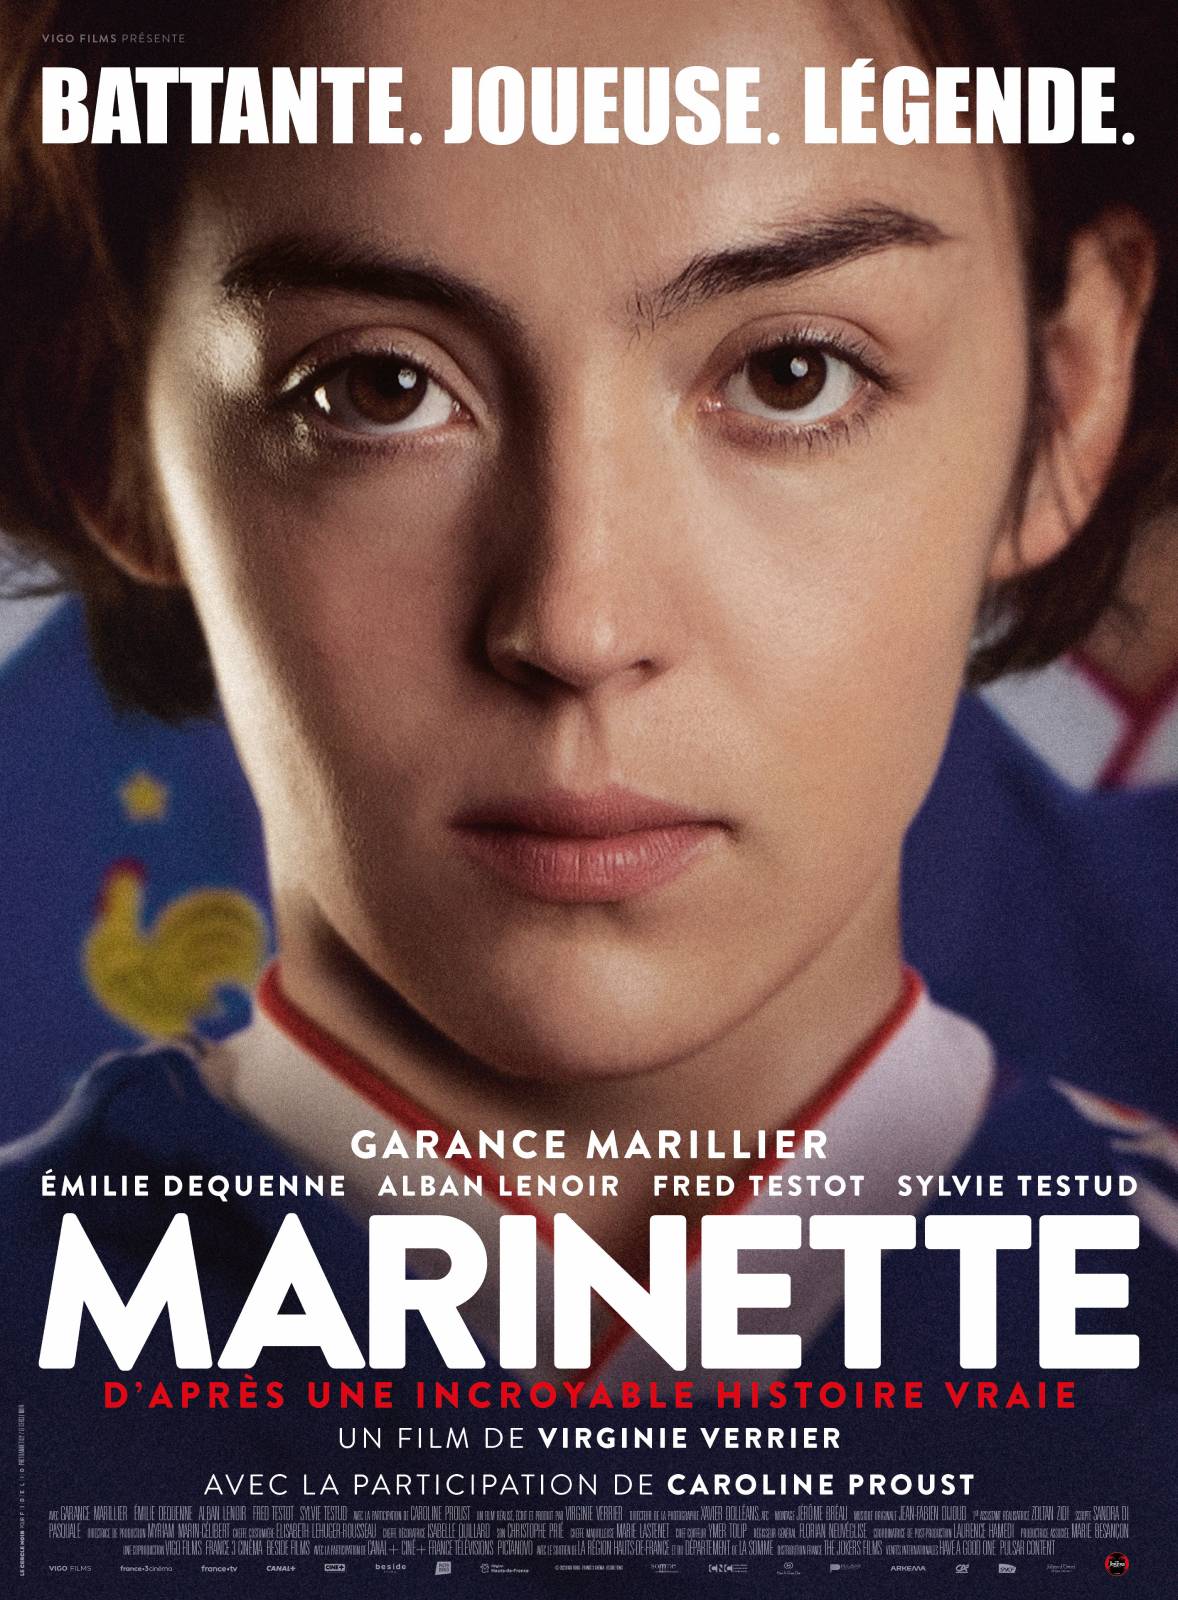 MARINETTE Marinette, biopic ambivalent